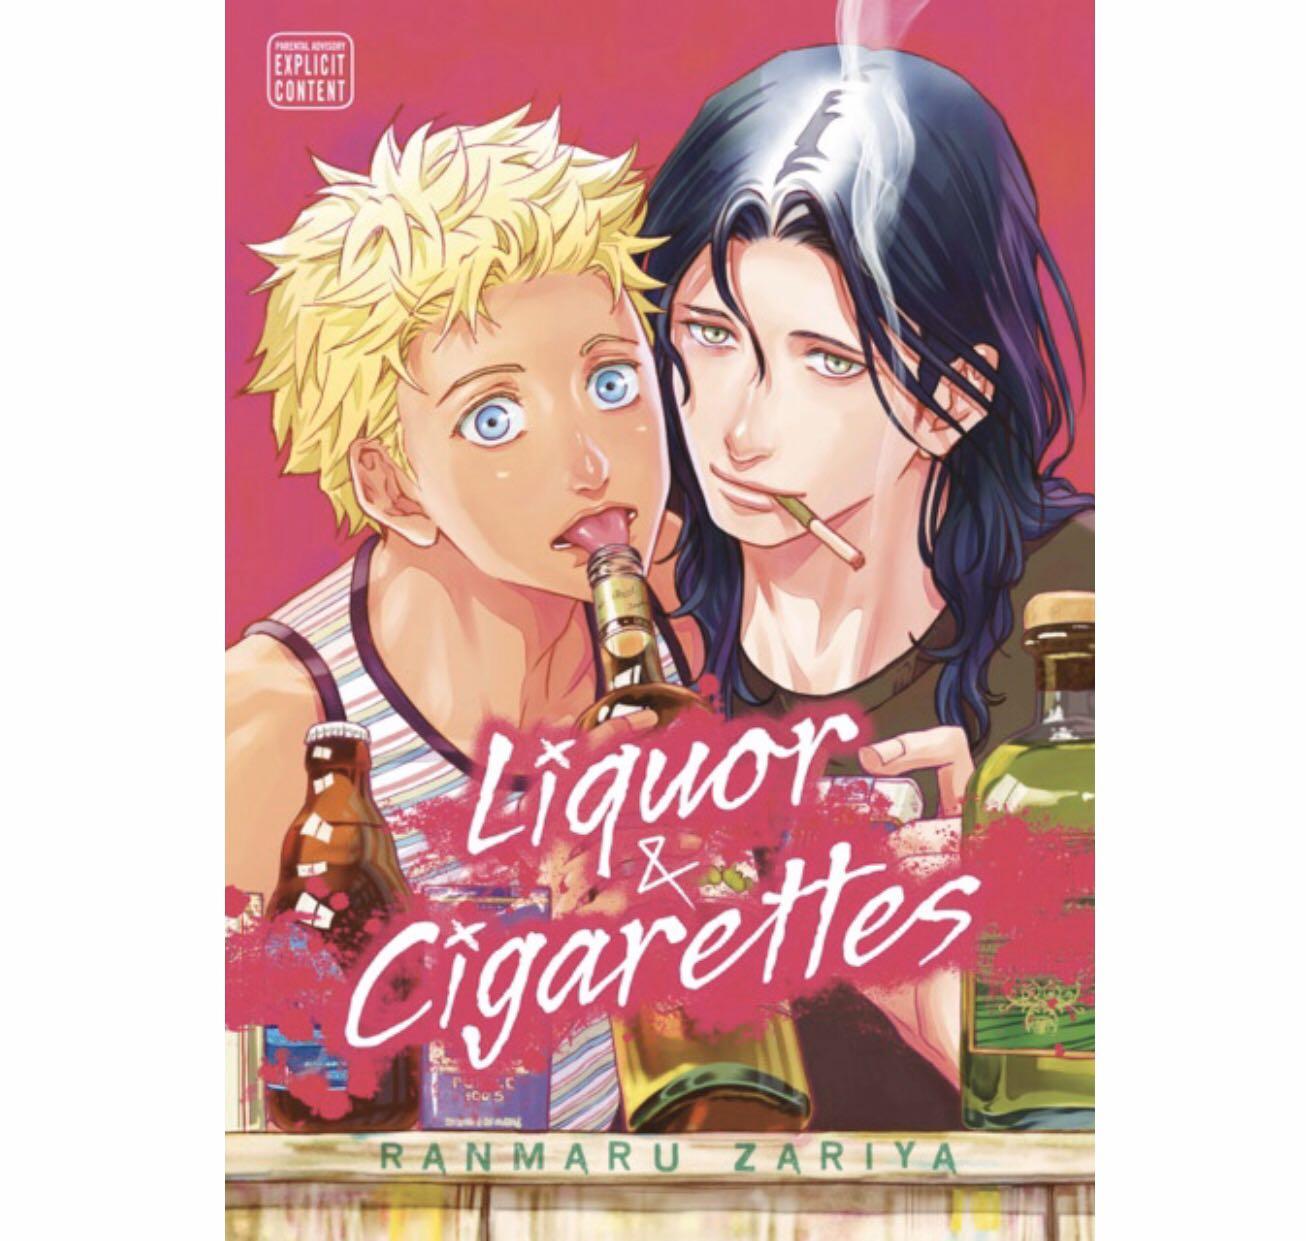 Liquor Cigarettes Manga Books Stationery Comics Manga On Carousell